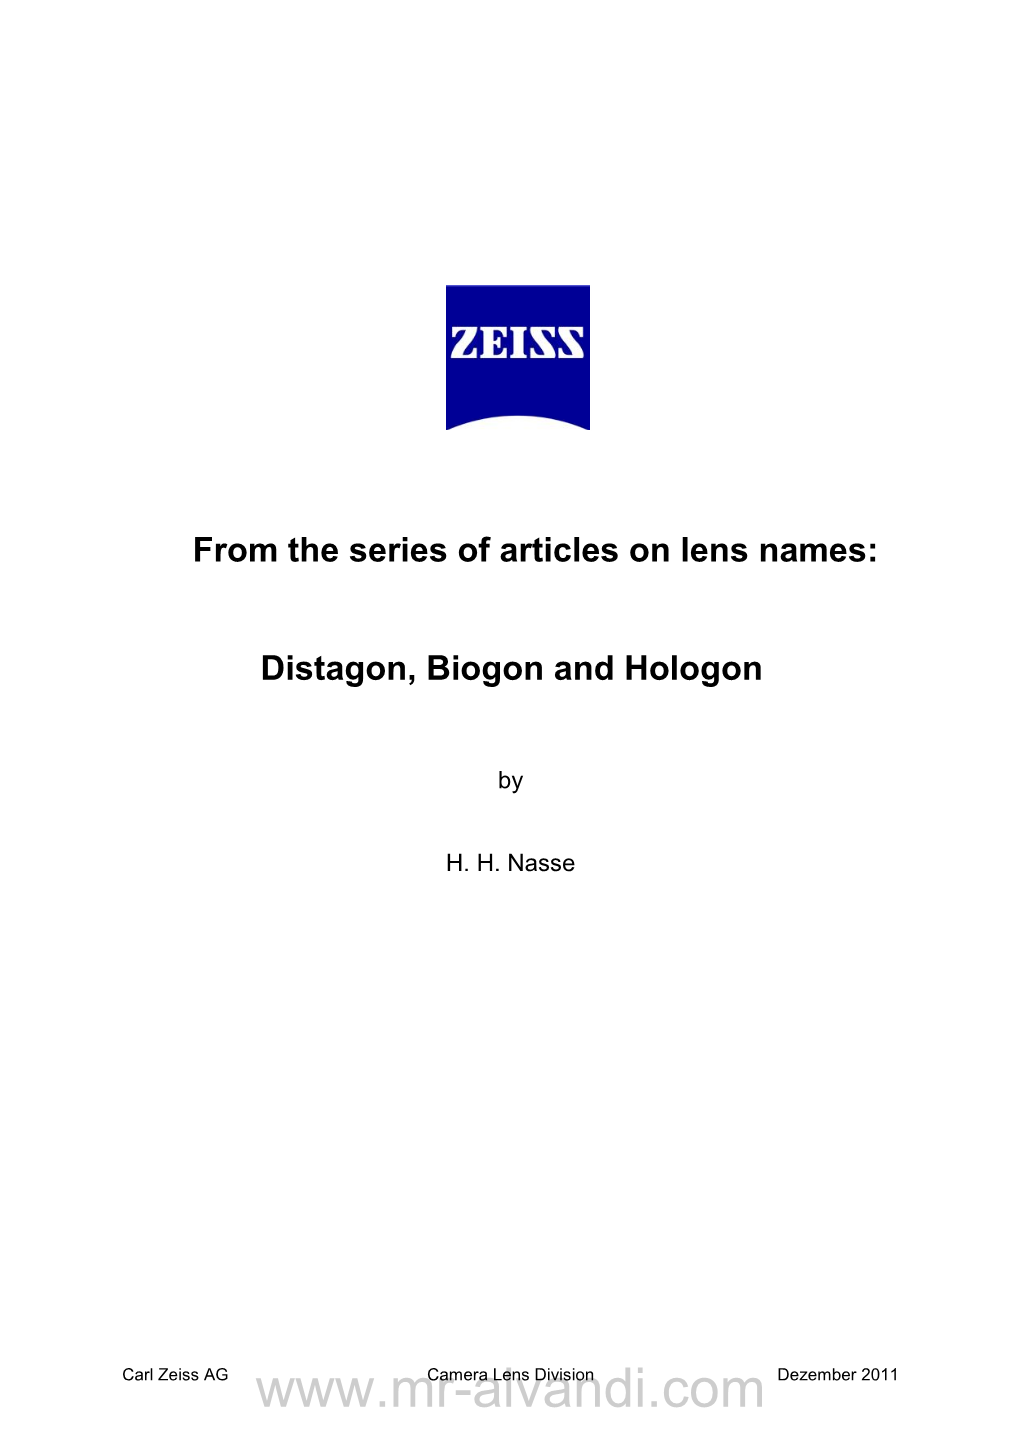 Carl Zeiss Distagon Biogon Hologon